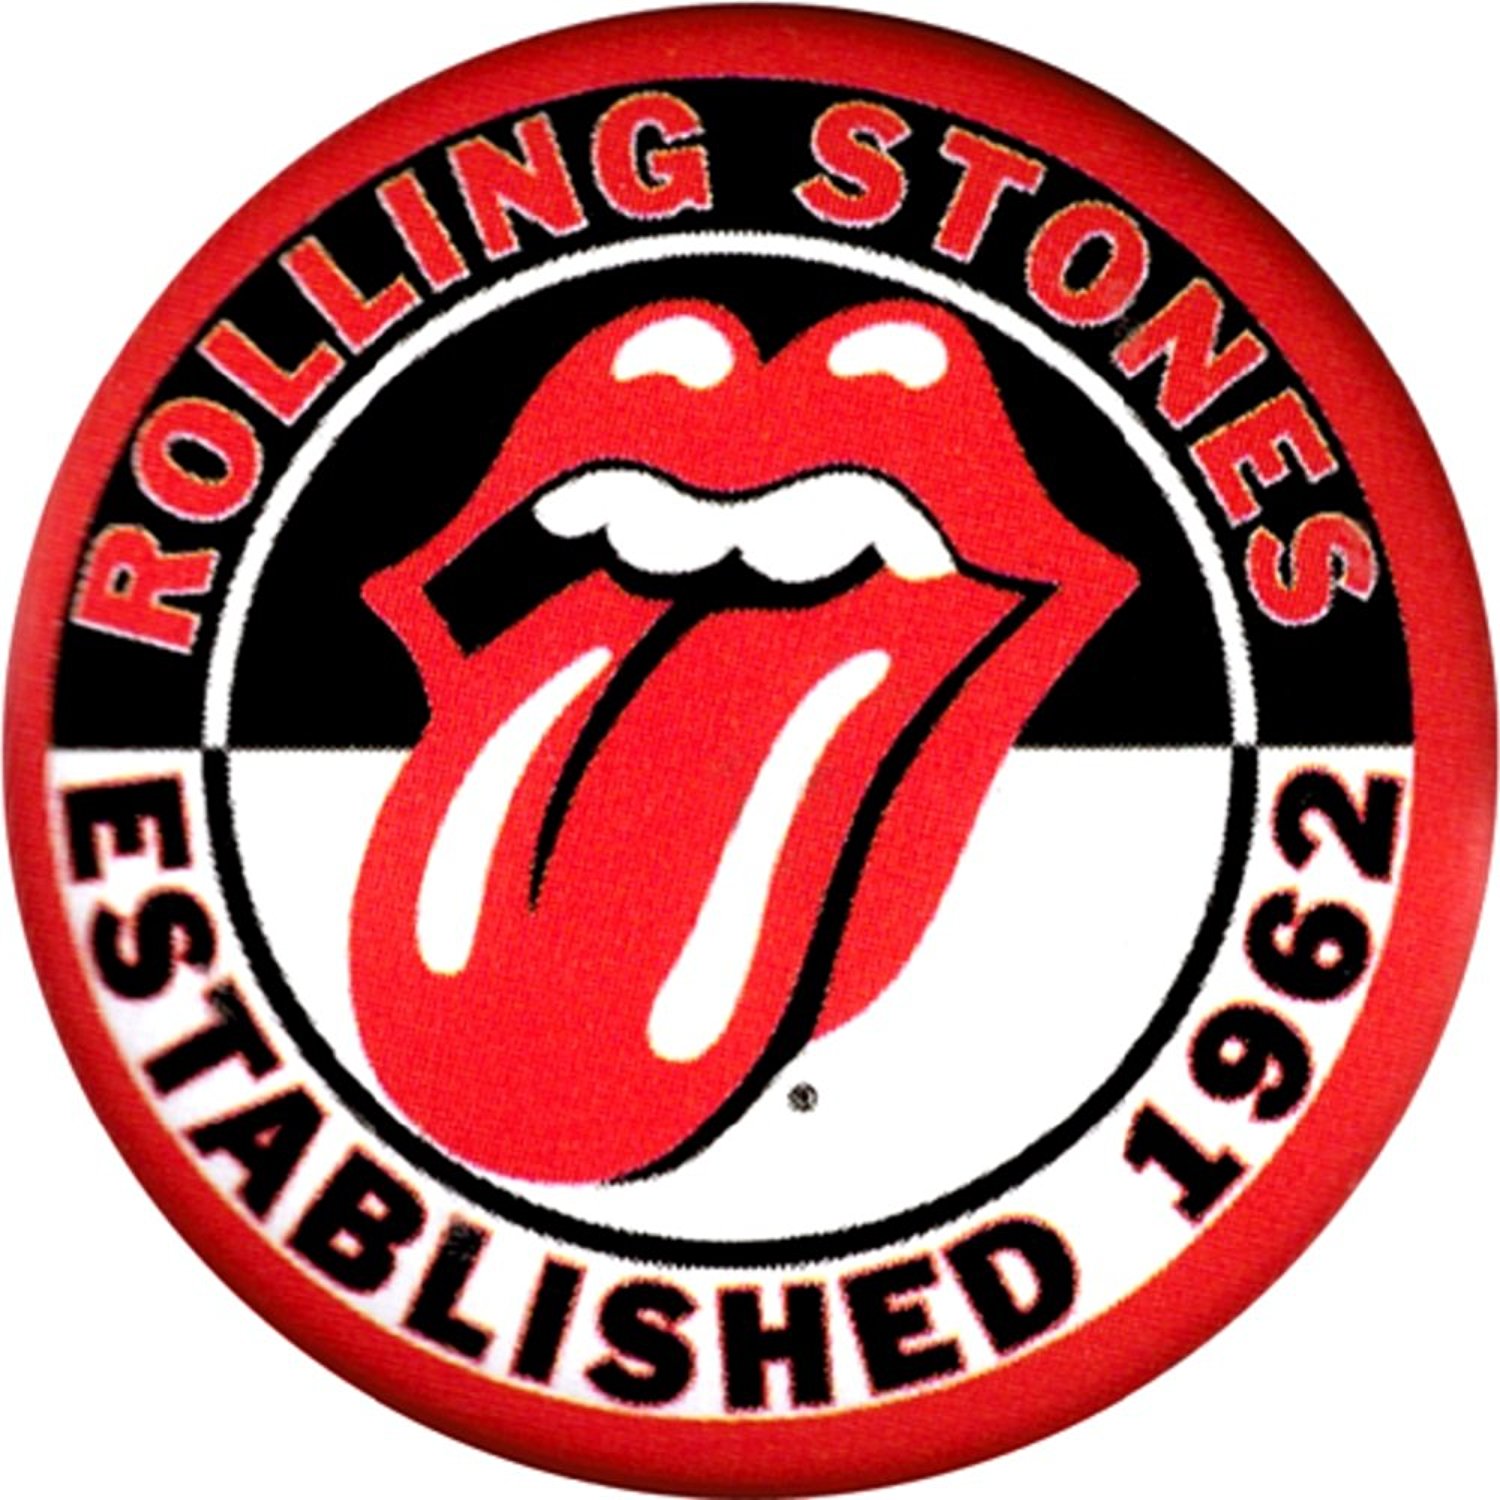 Rolling stones Logos